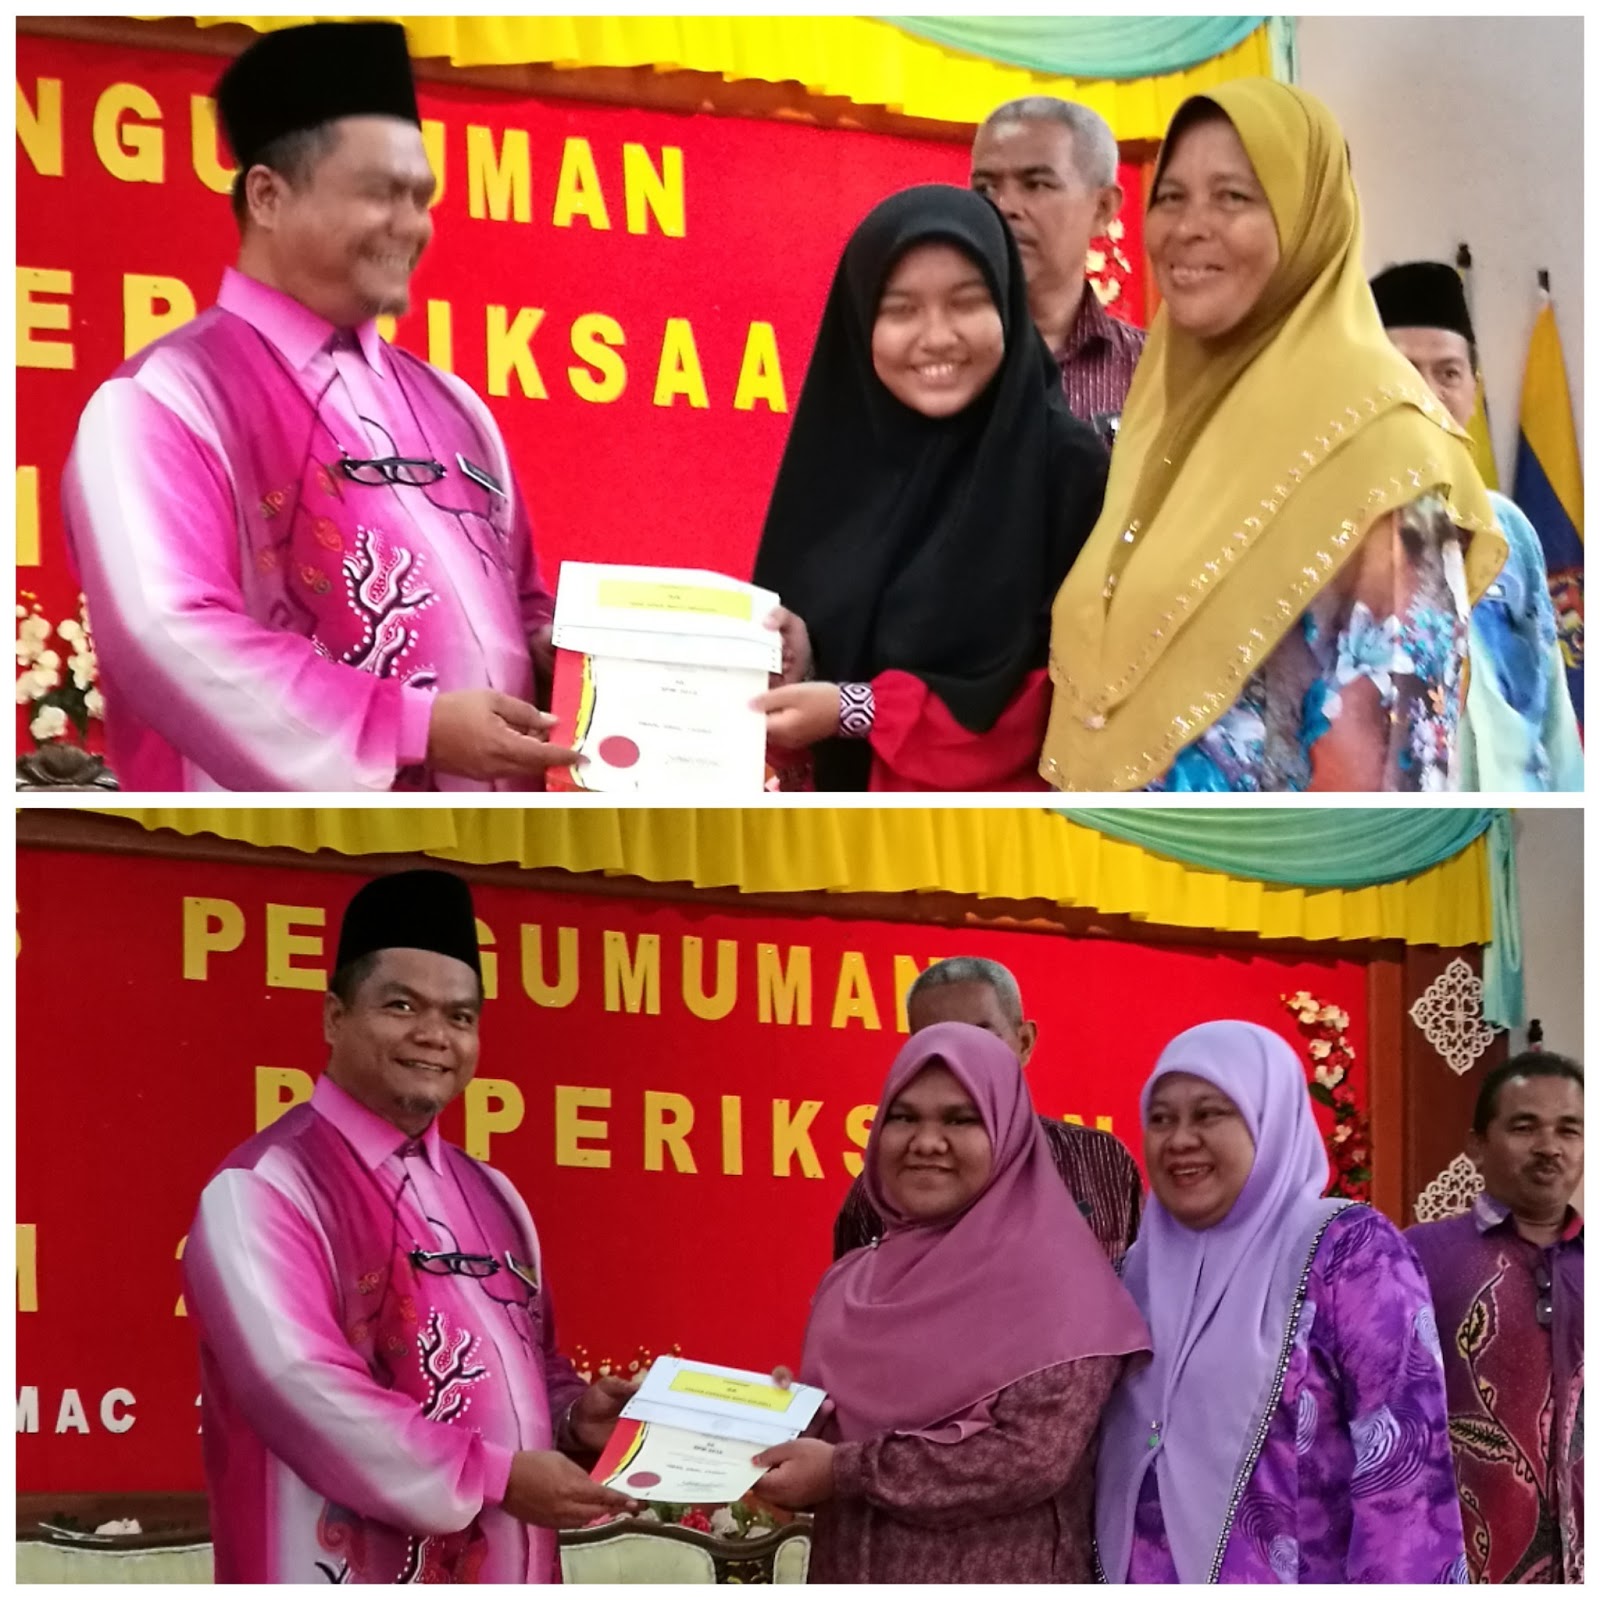 Ibu Bapa Siti Kasim - Kasim taklimat guru tahun 6 akur janji calon upsr